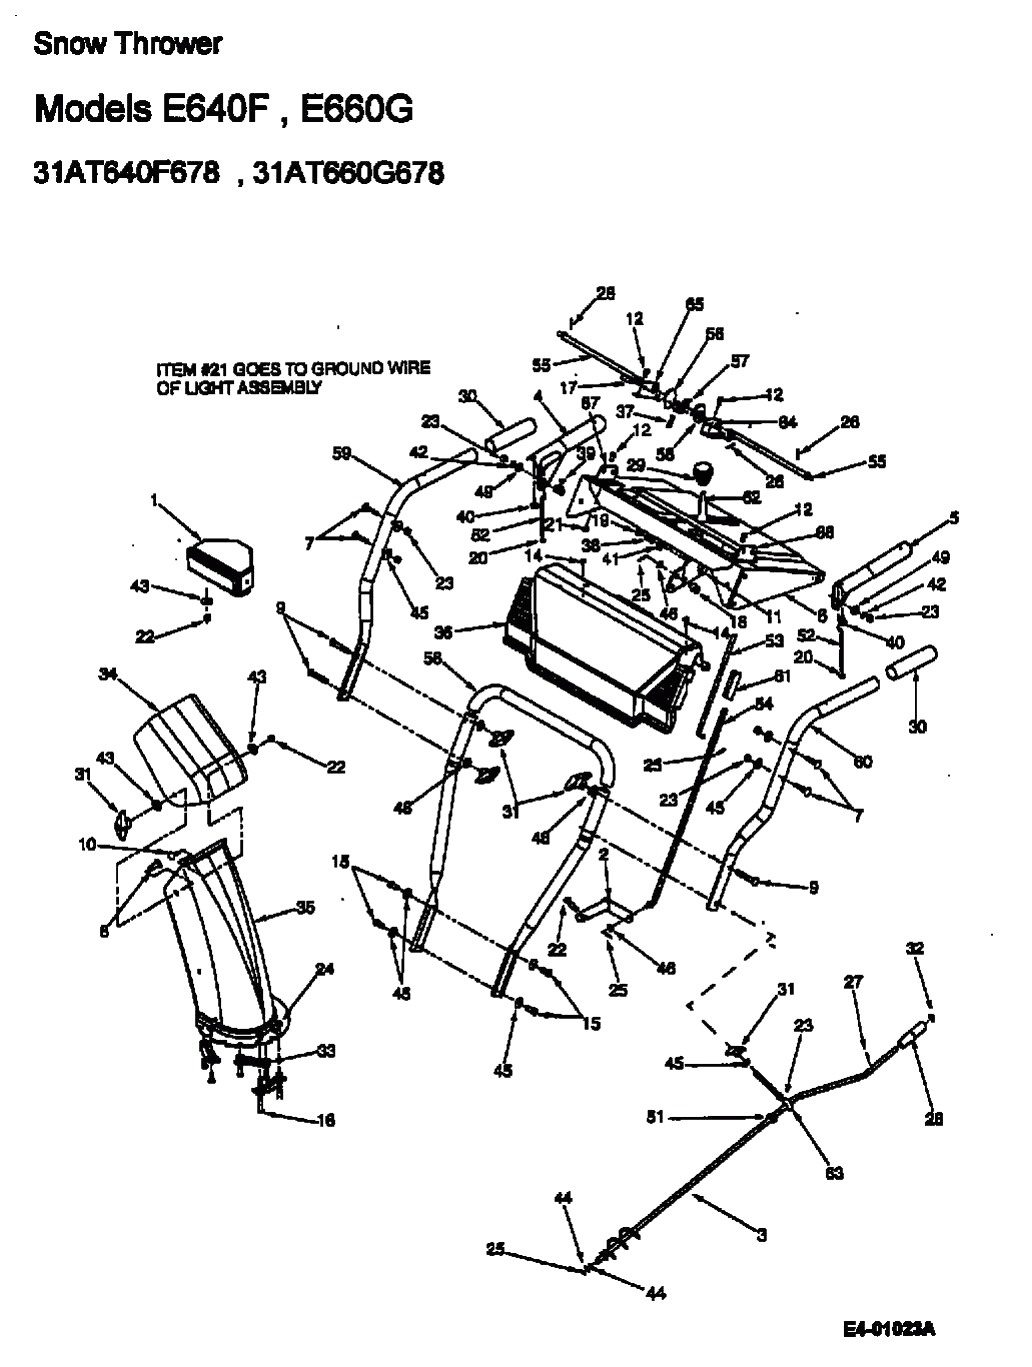 MTD Артикул 31AE660G678 (год выпуска 2000). Приборная панель, Разгрузочный желоб, ручка